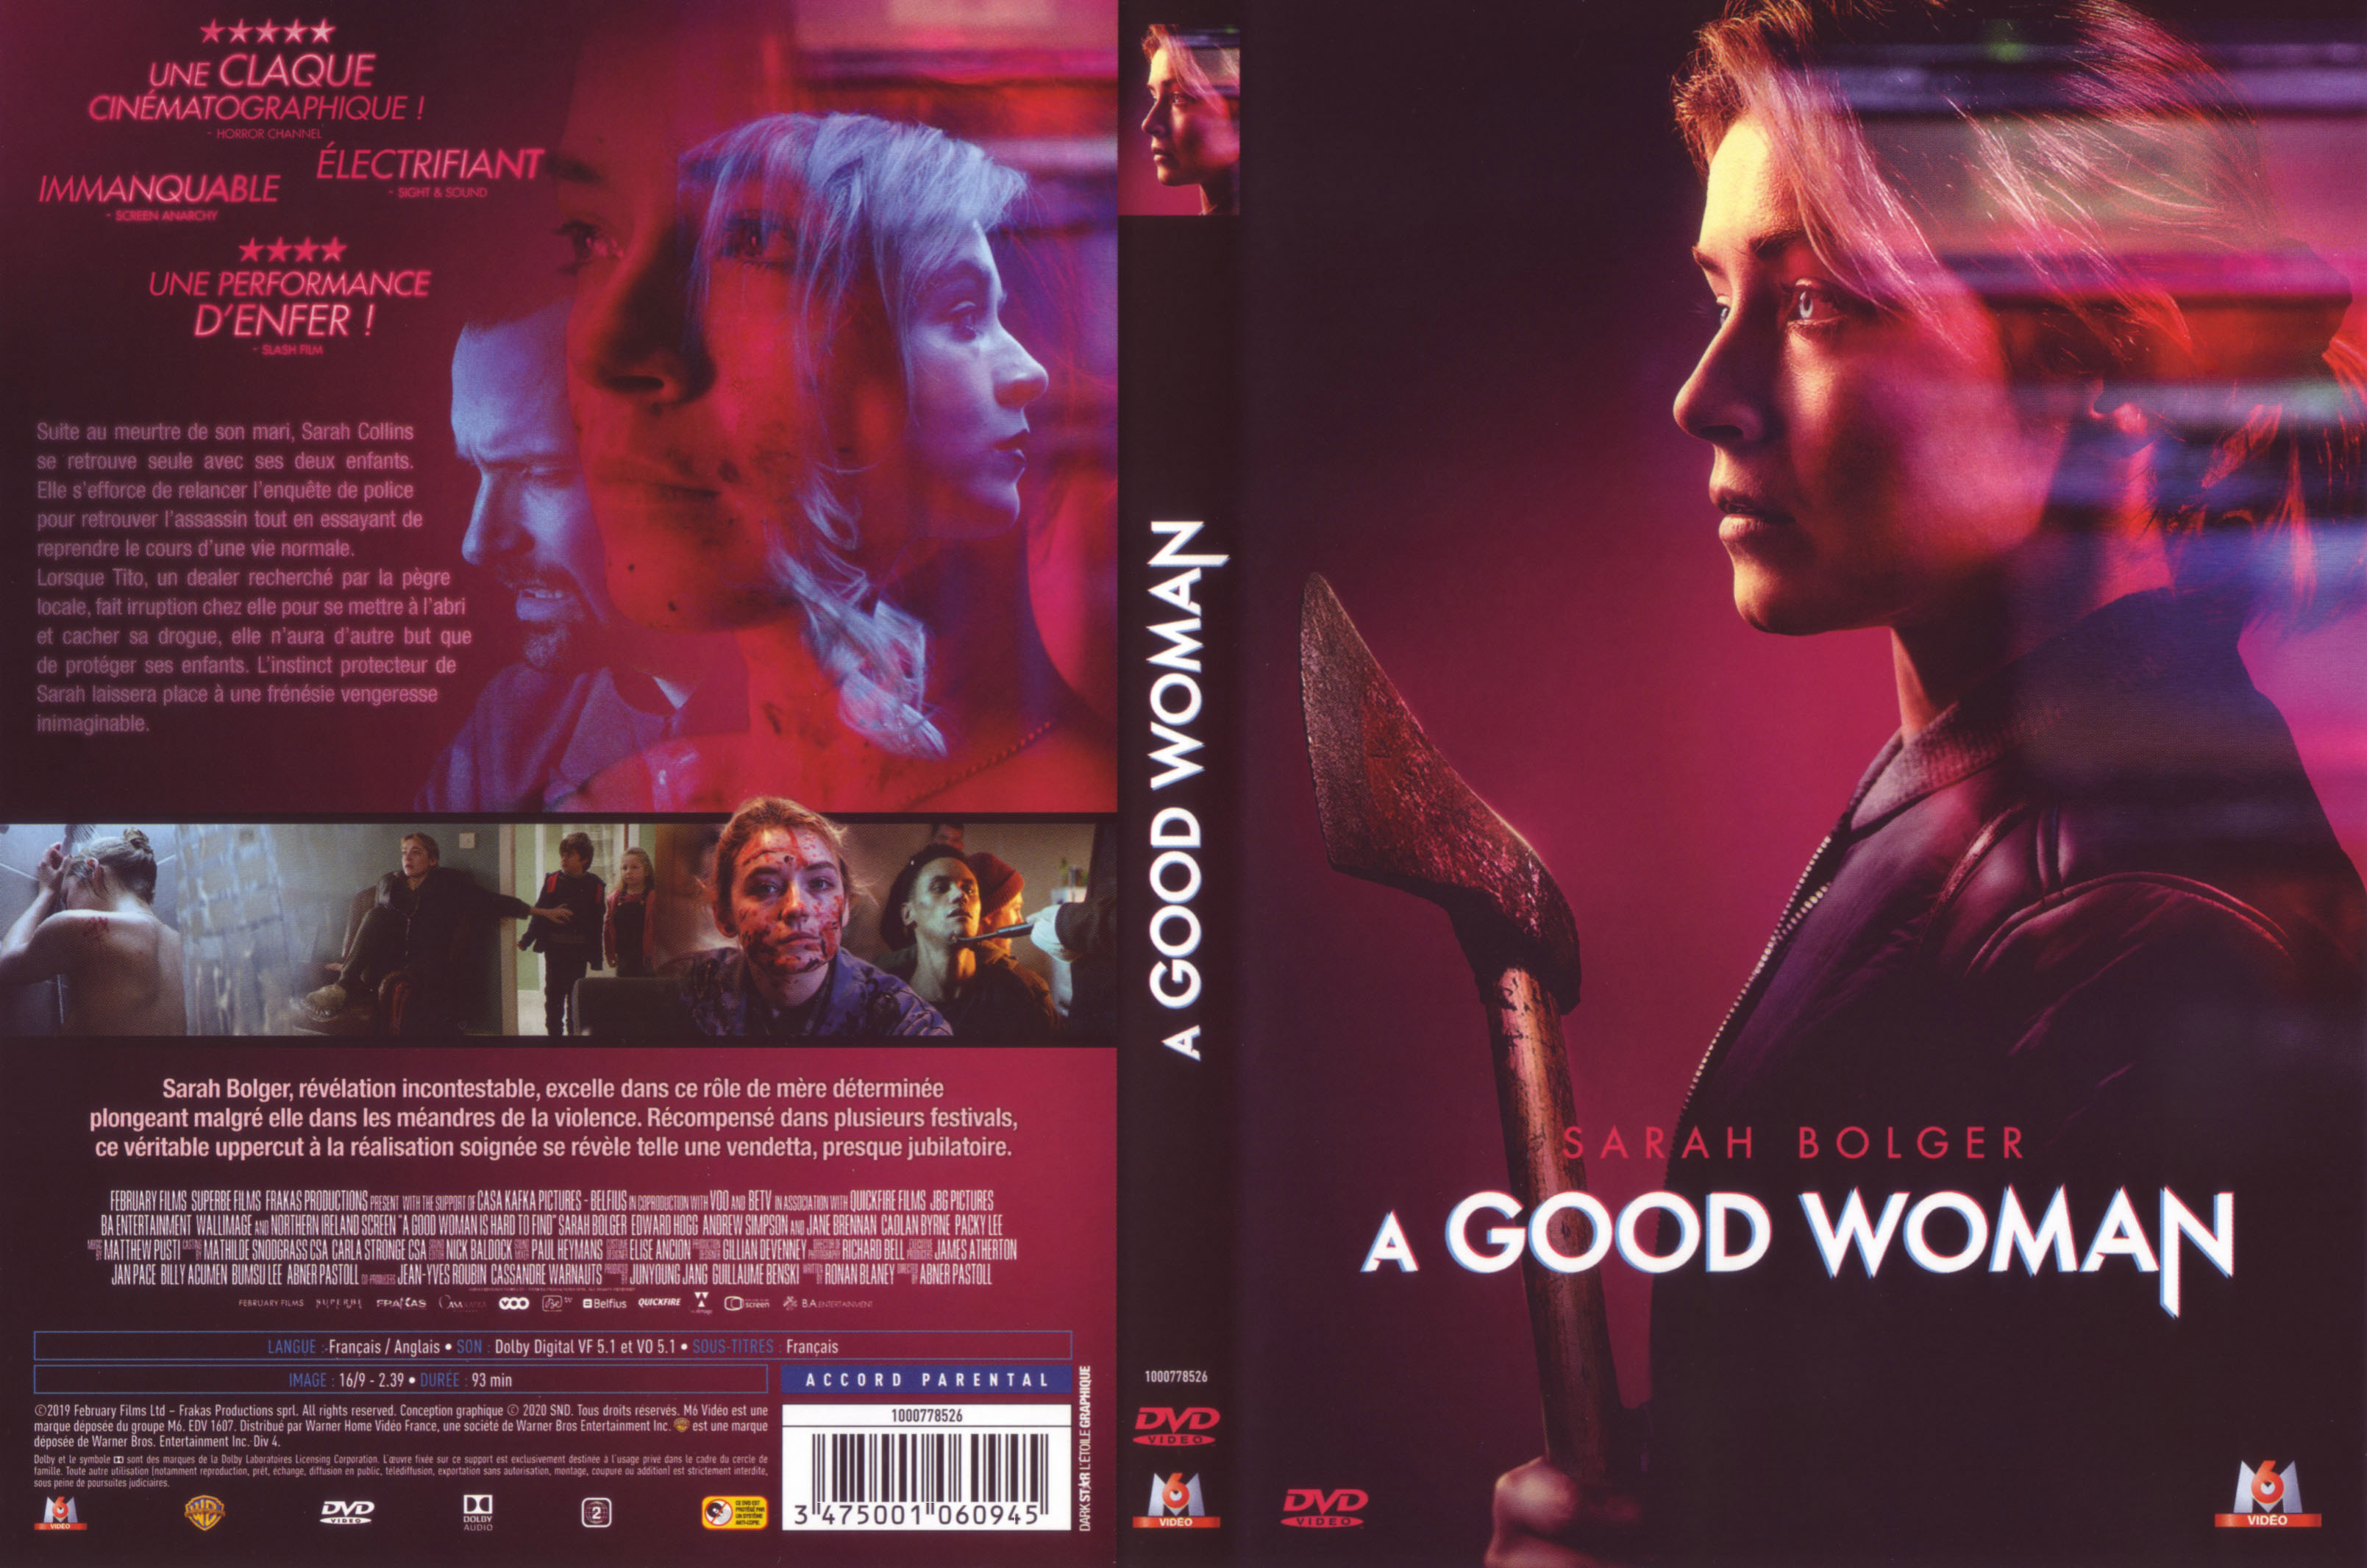 Jaquette DVD A good woman